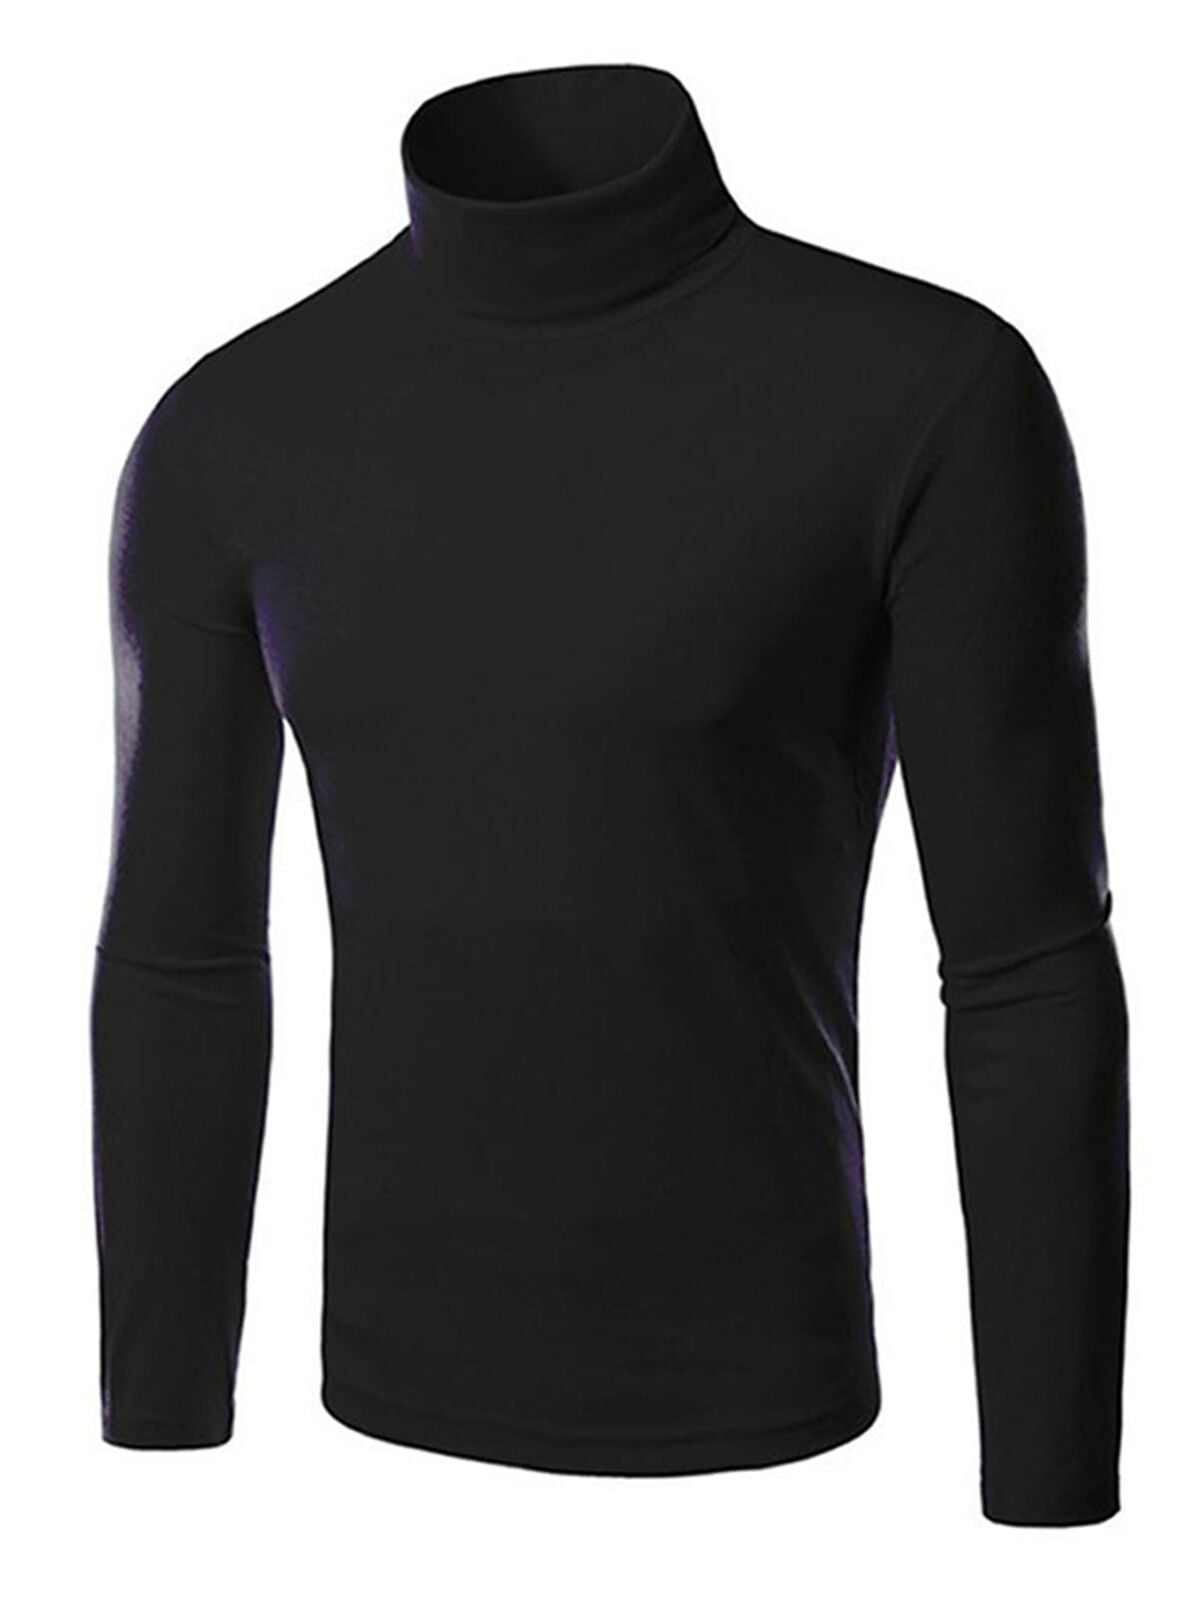 Men Autumn Winter Warm Thermal Underwear Long Sleeve Turtleneck Shirt ...